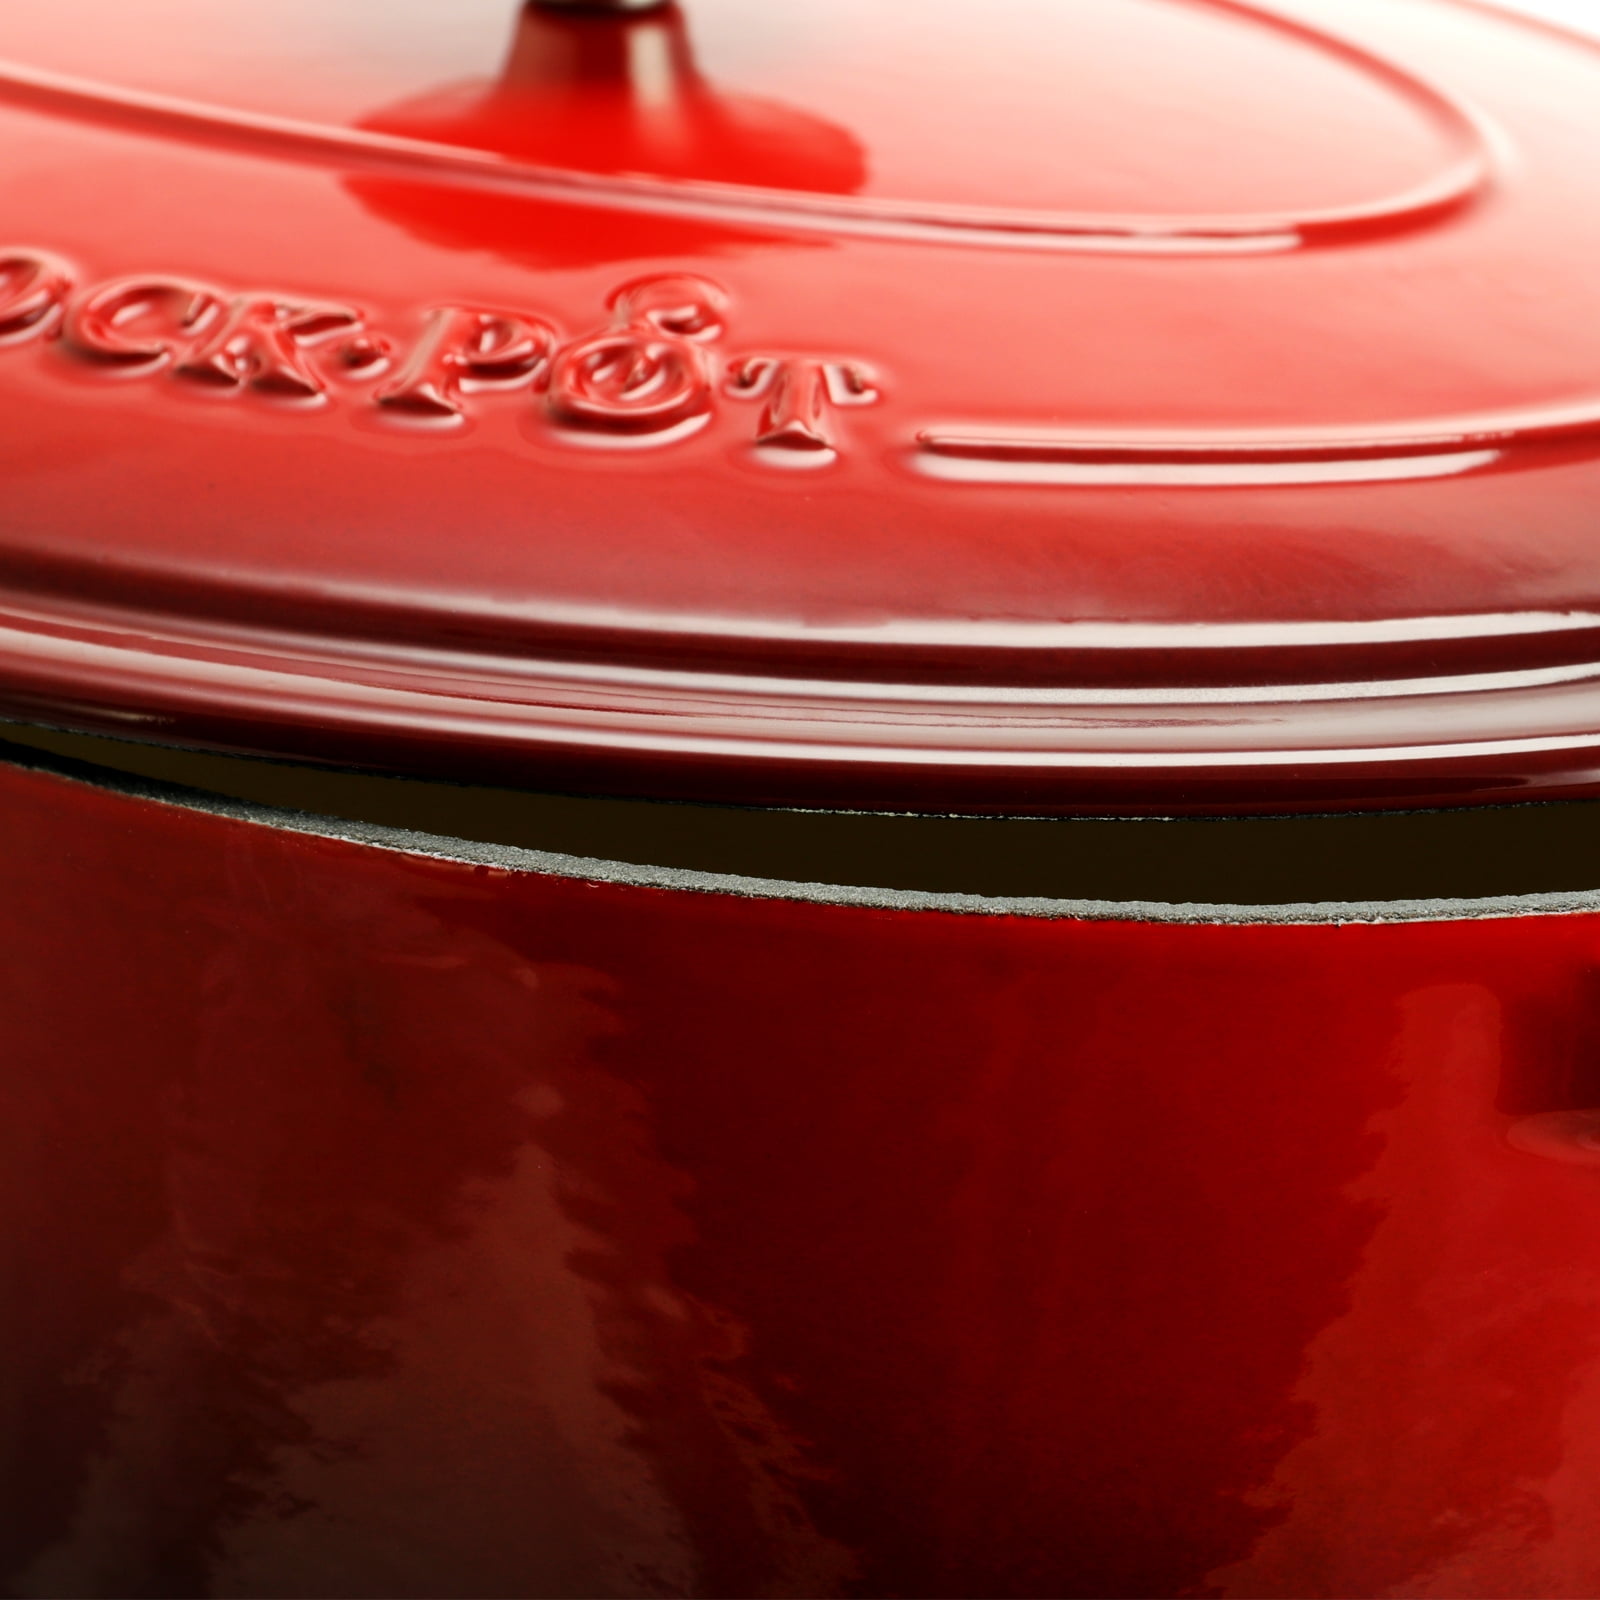 Crock-Pot Artisan Oval Enameled Cast Iron Dutch Oven, 7-Quart, Scarlet Red